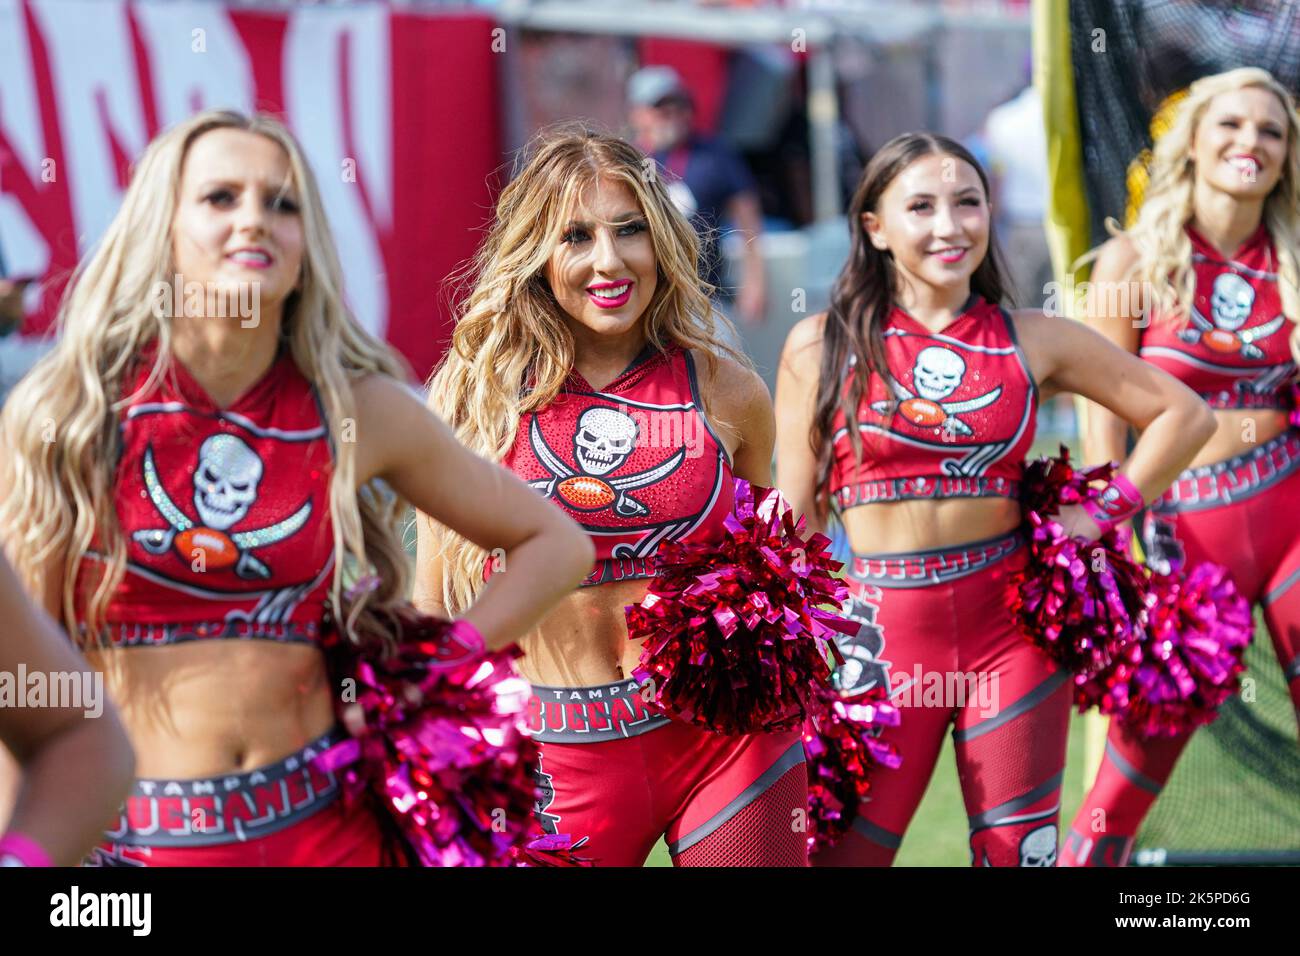 2,118 Tampa Bay Buccaneers Cheerleaders Photos & High Res Pictures